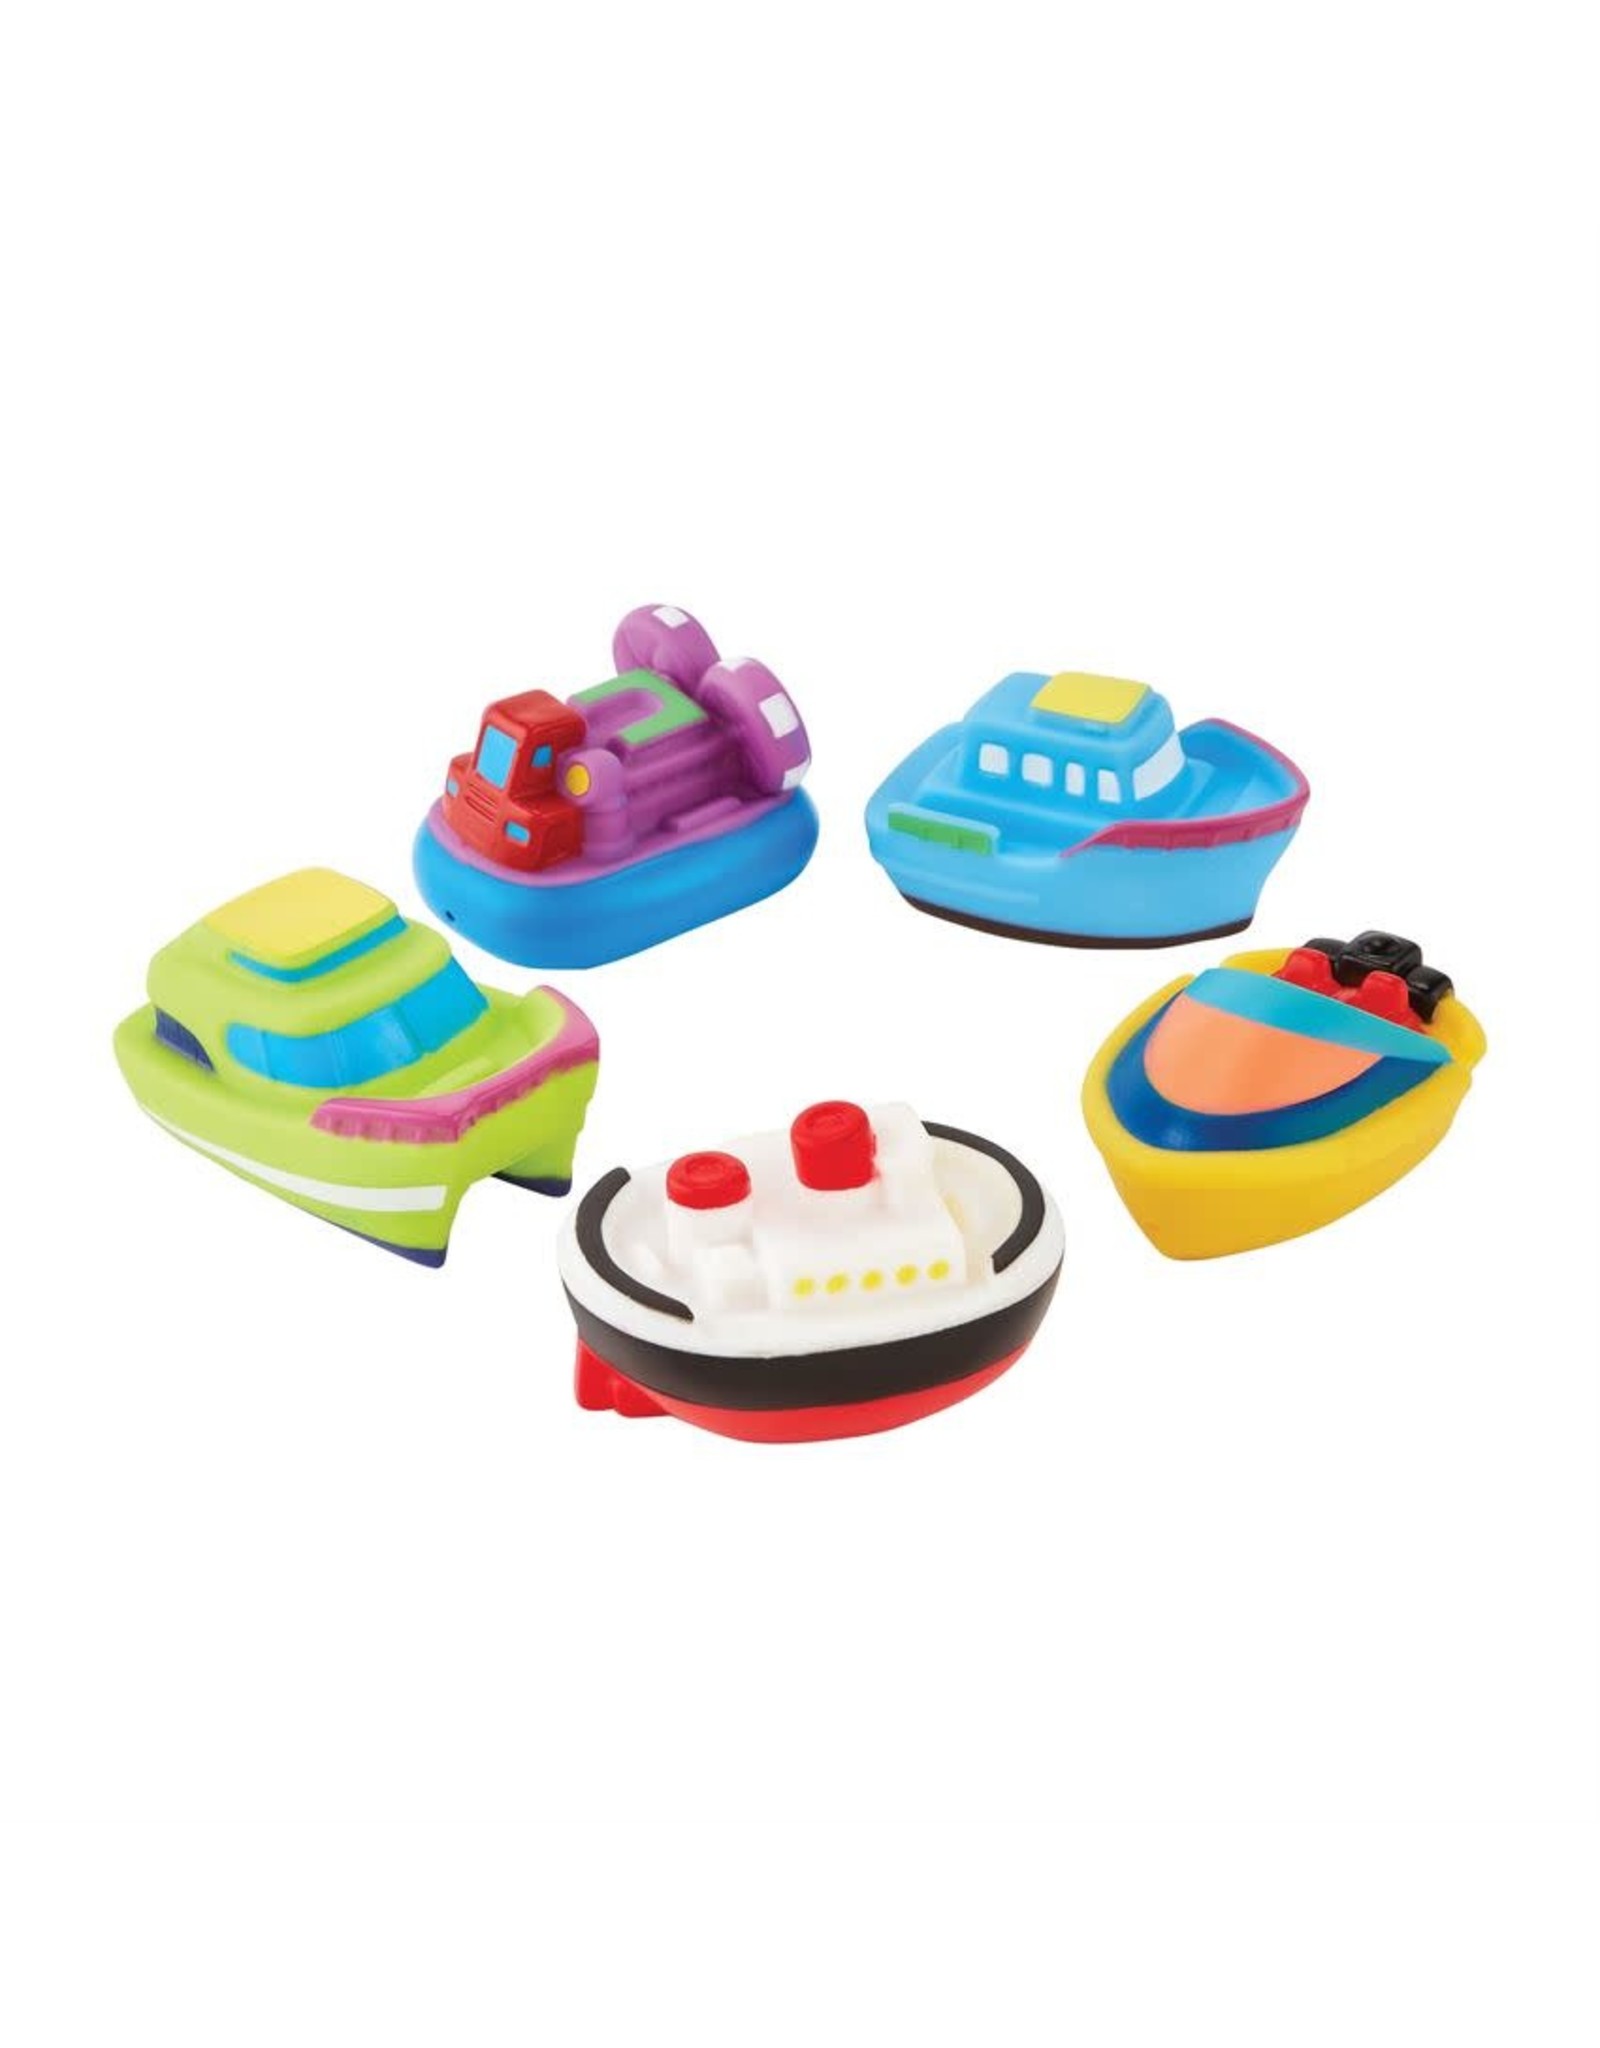 Mud Pie Kids Gifts Bath Toy Squirt Set Boat Friends